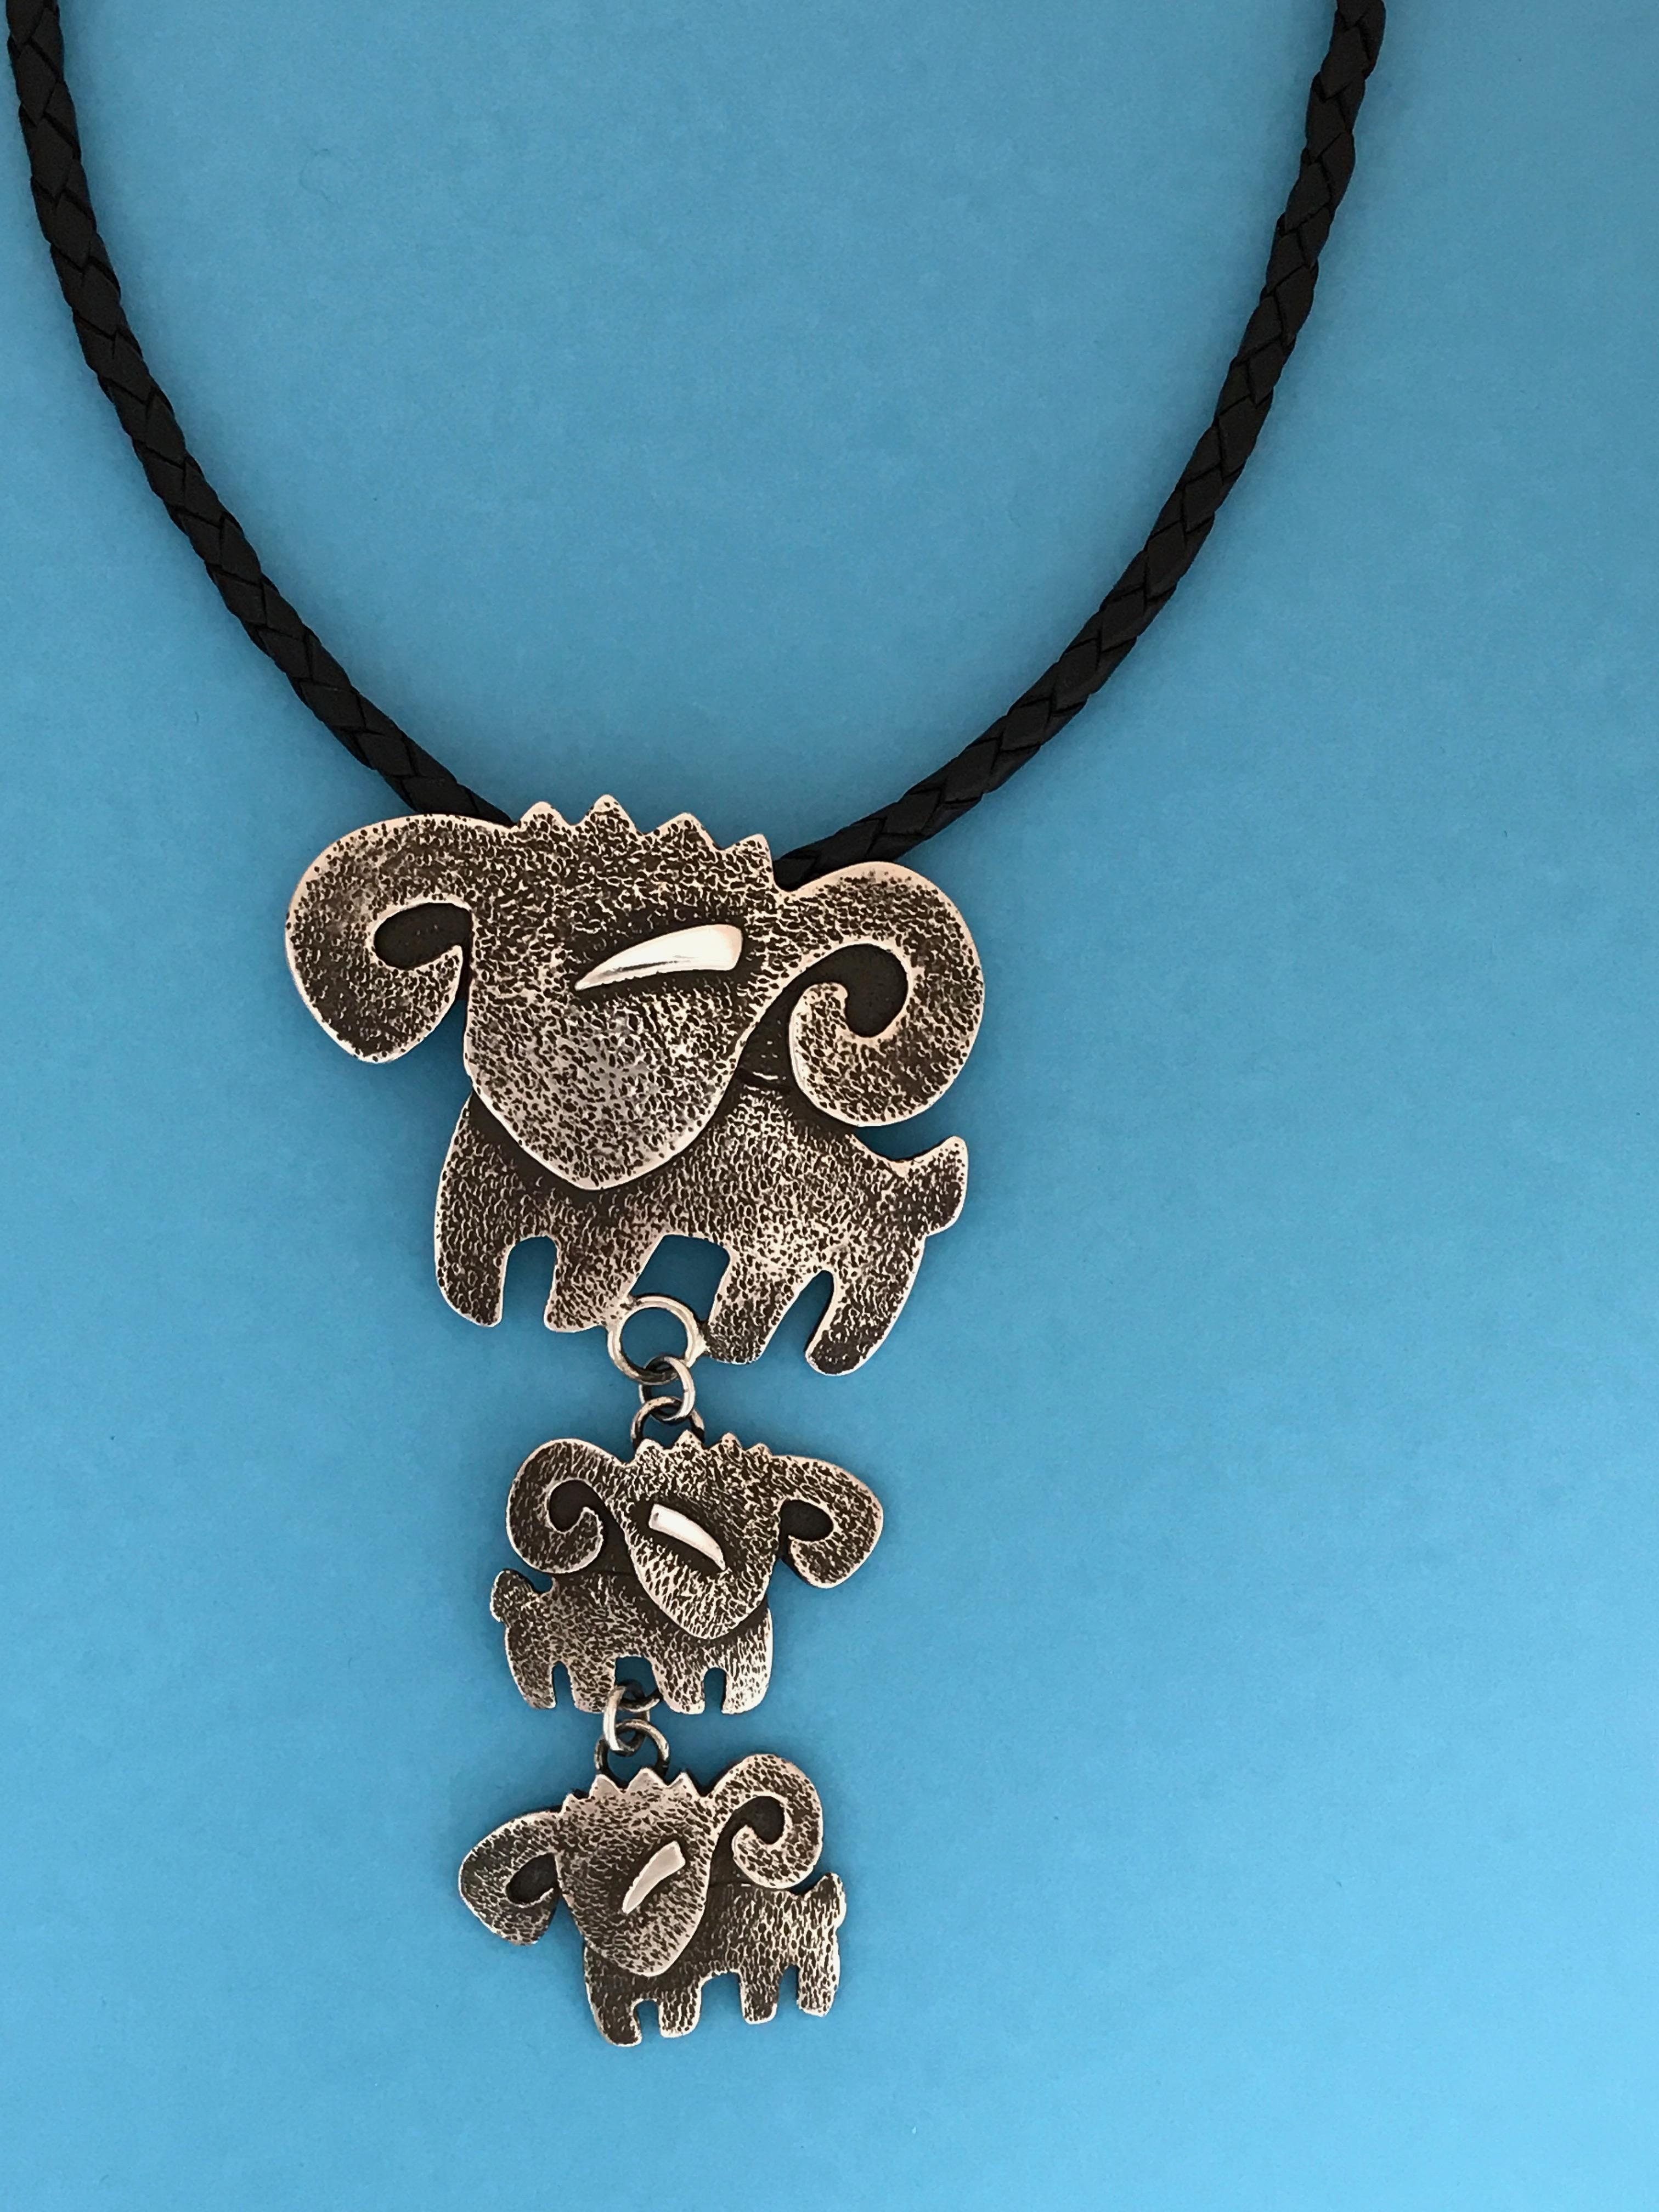 Ram drop pendant, by Melanie Yazzie, cast, sterling silver, Navajo, necklace For Sale 2